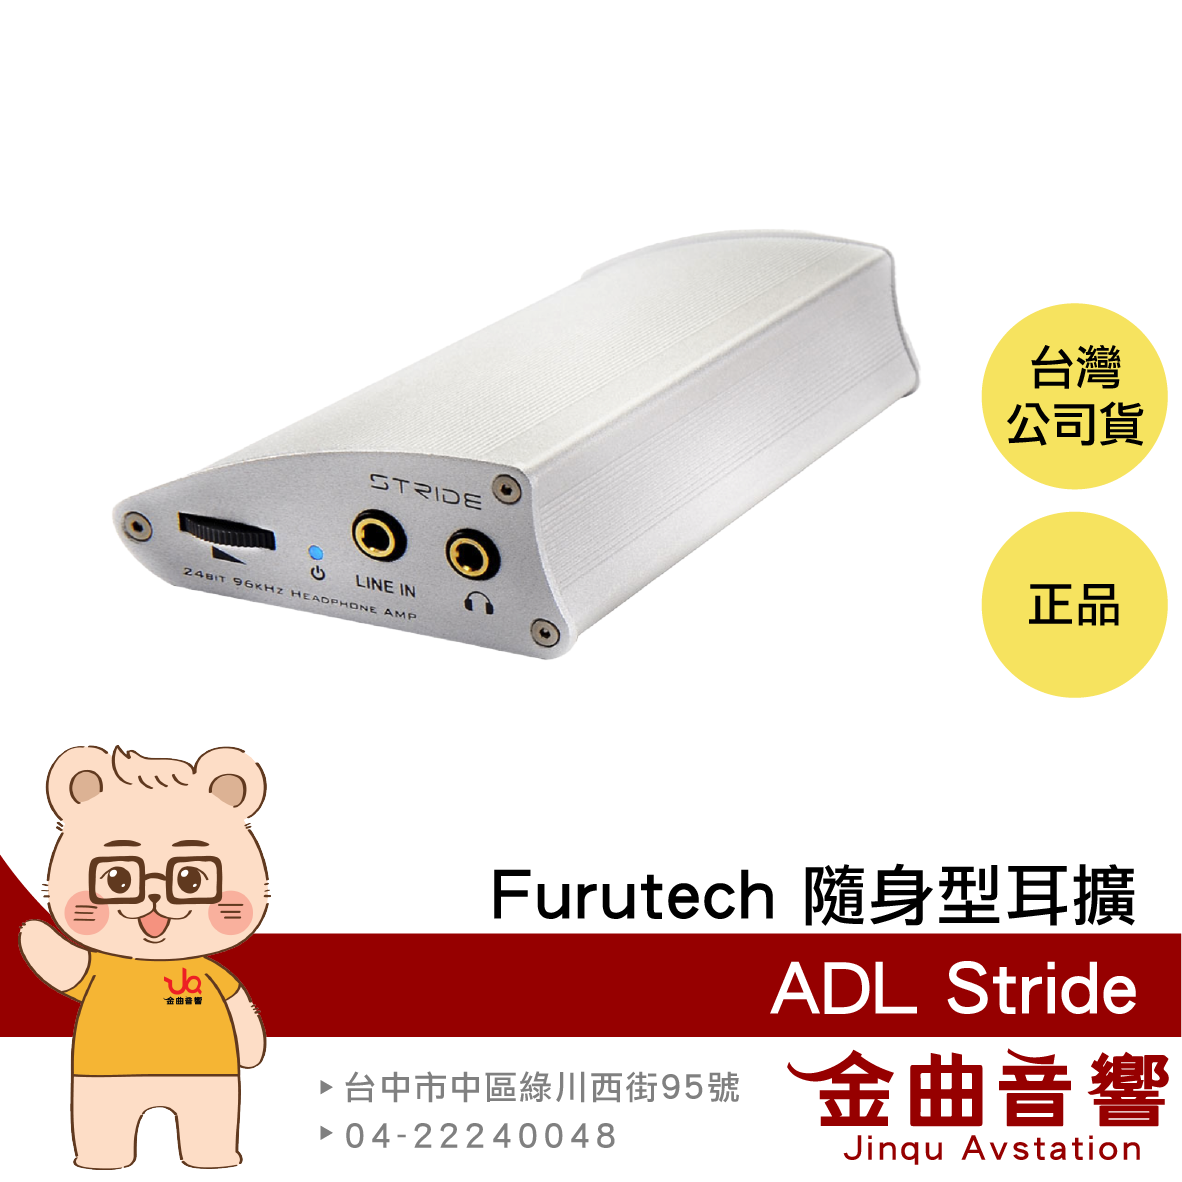 FURUTECH 古河 ADL Stride USB DAC 白色 輕巧隨身型 耳擴 | 金曲音響